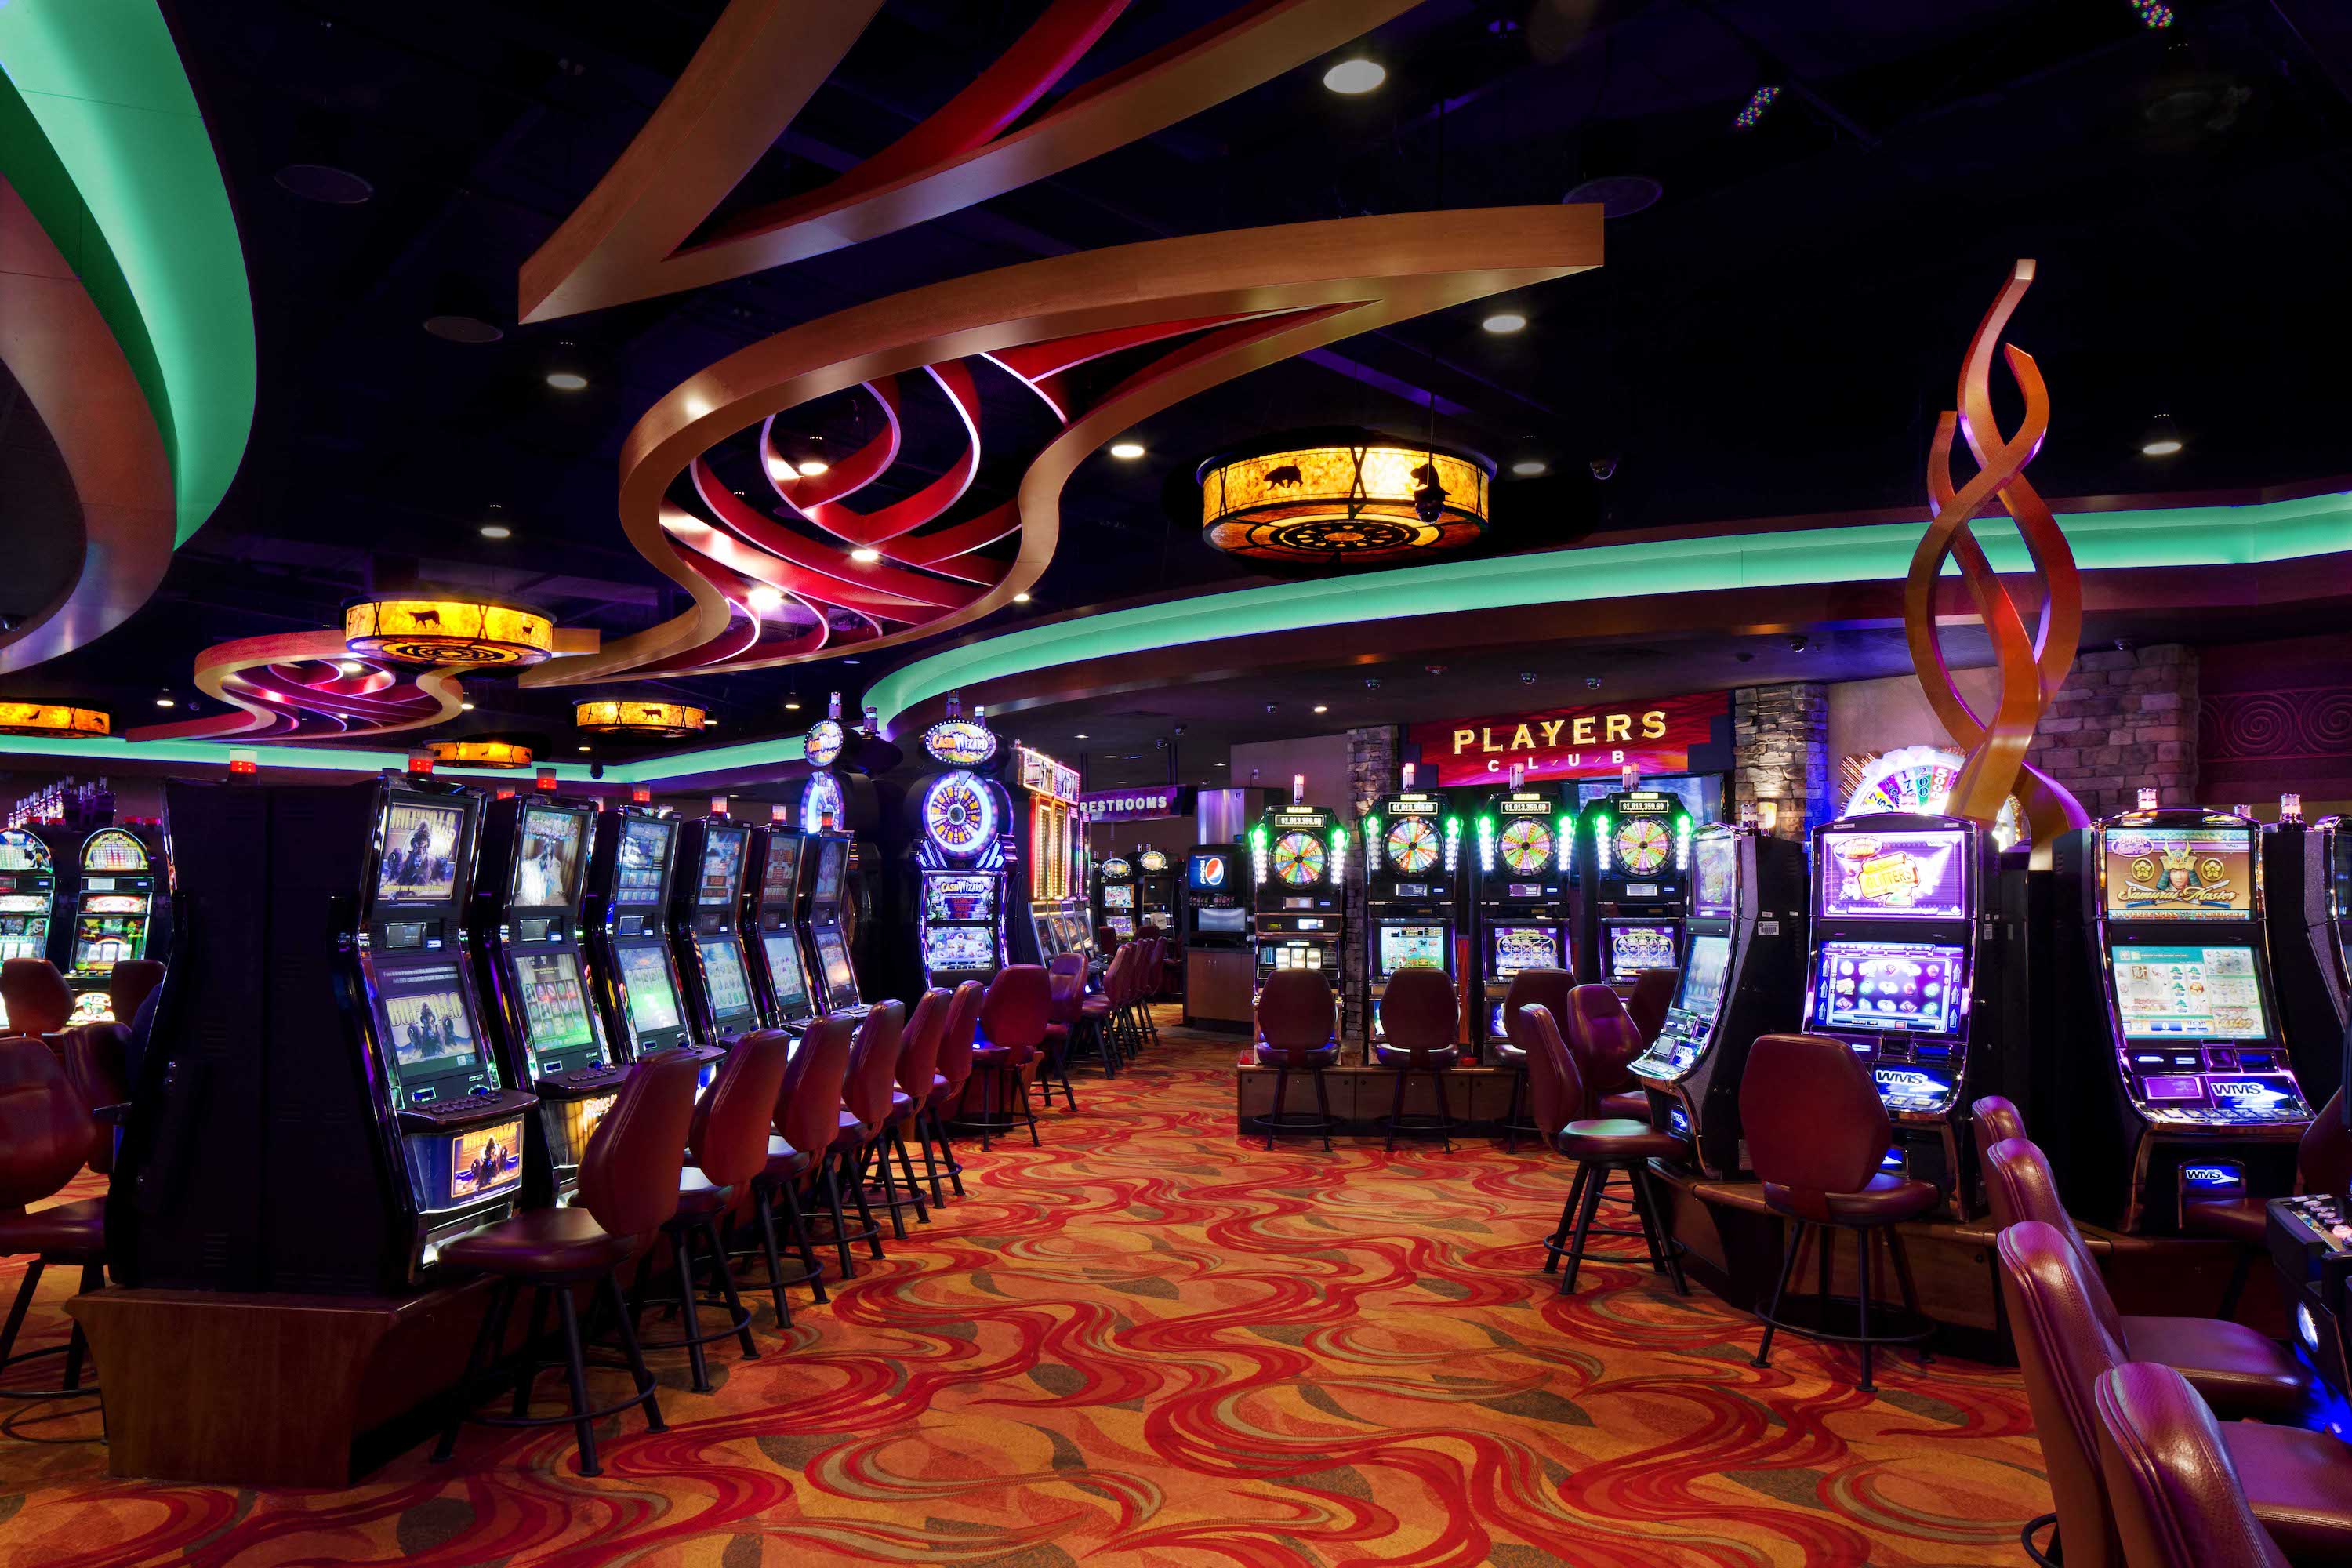 Casino gaming club anгўlise 2020 bгіnus grгѓtis atг 350 в‚ Hangman heart of vegas slots free slot machines